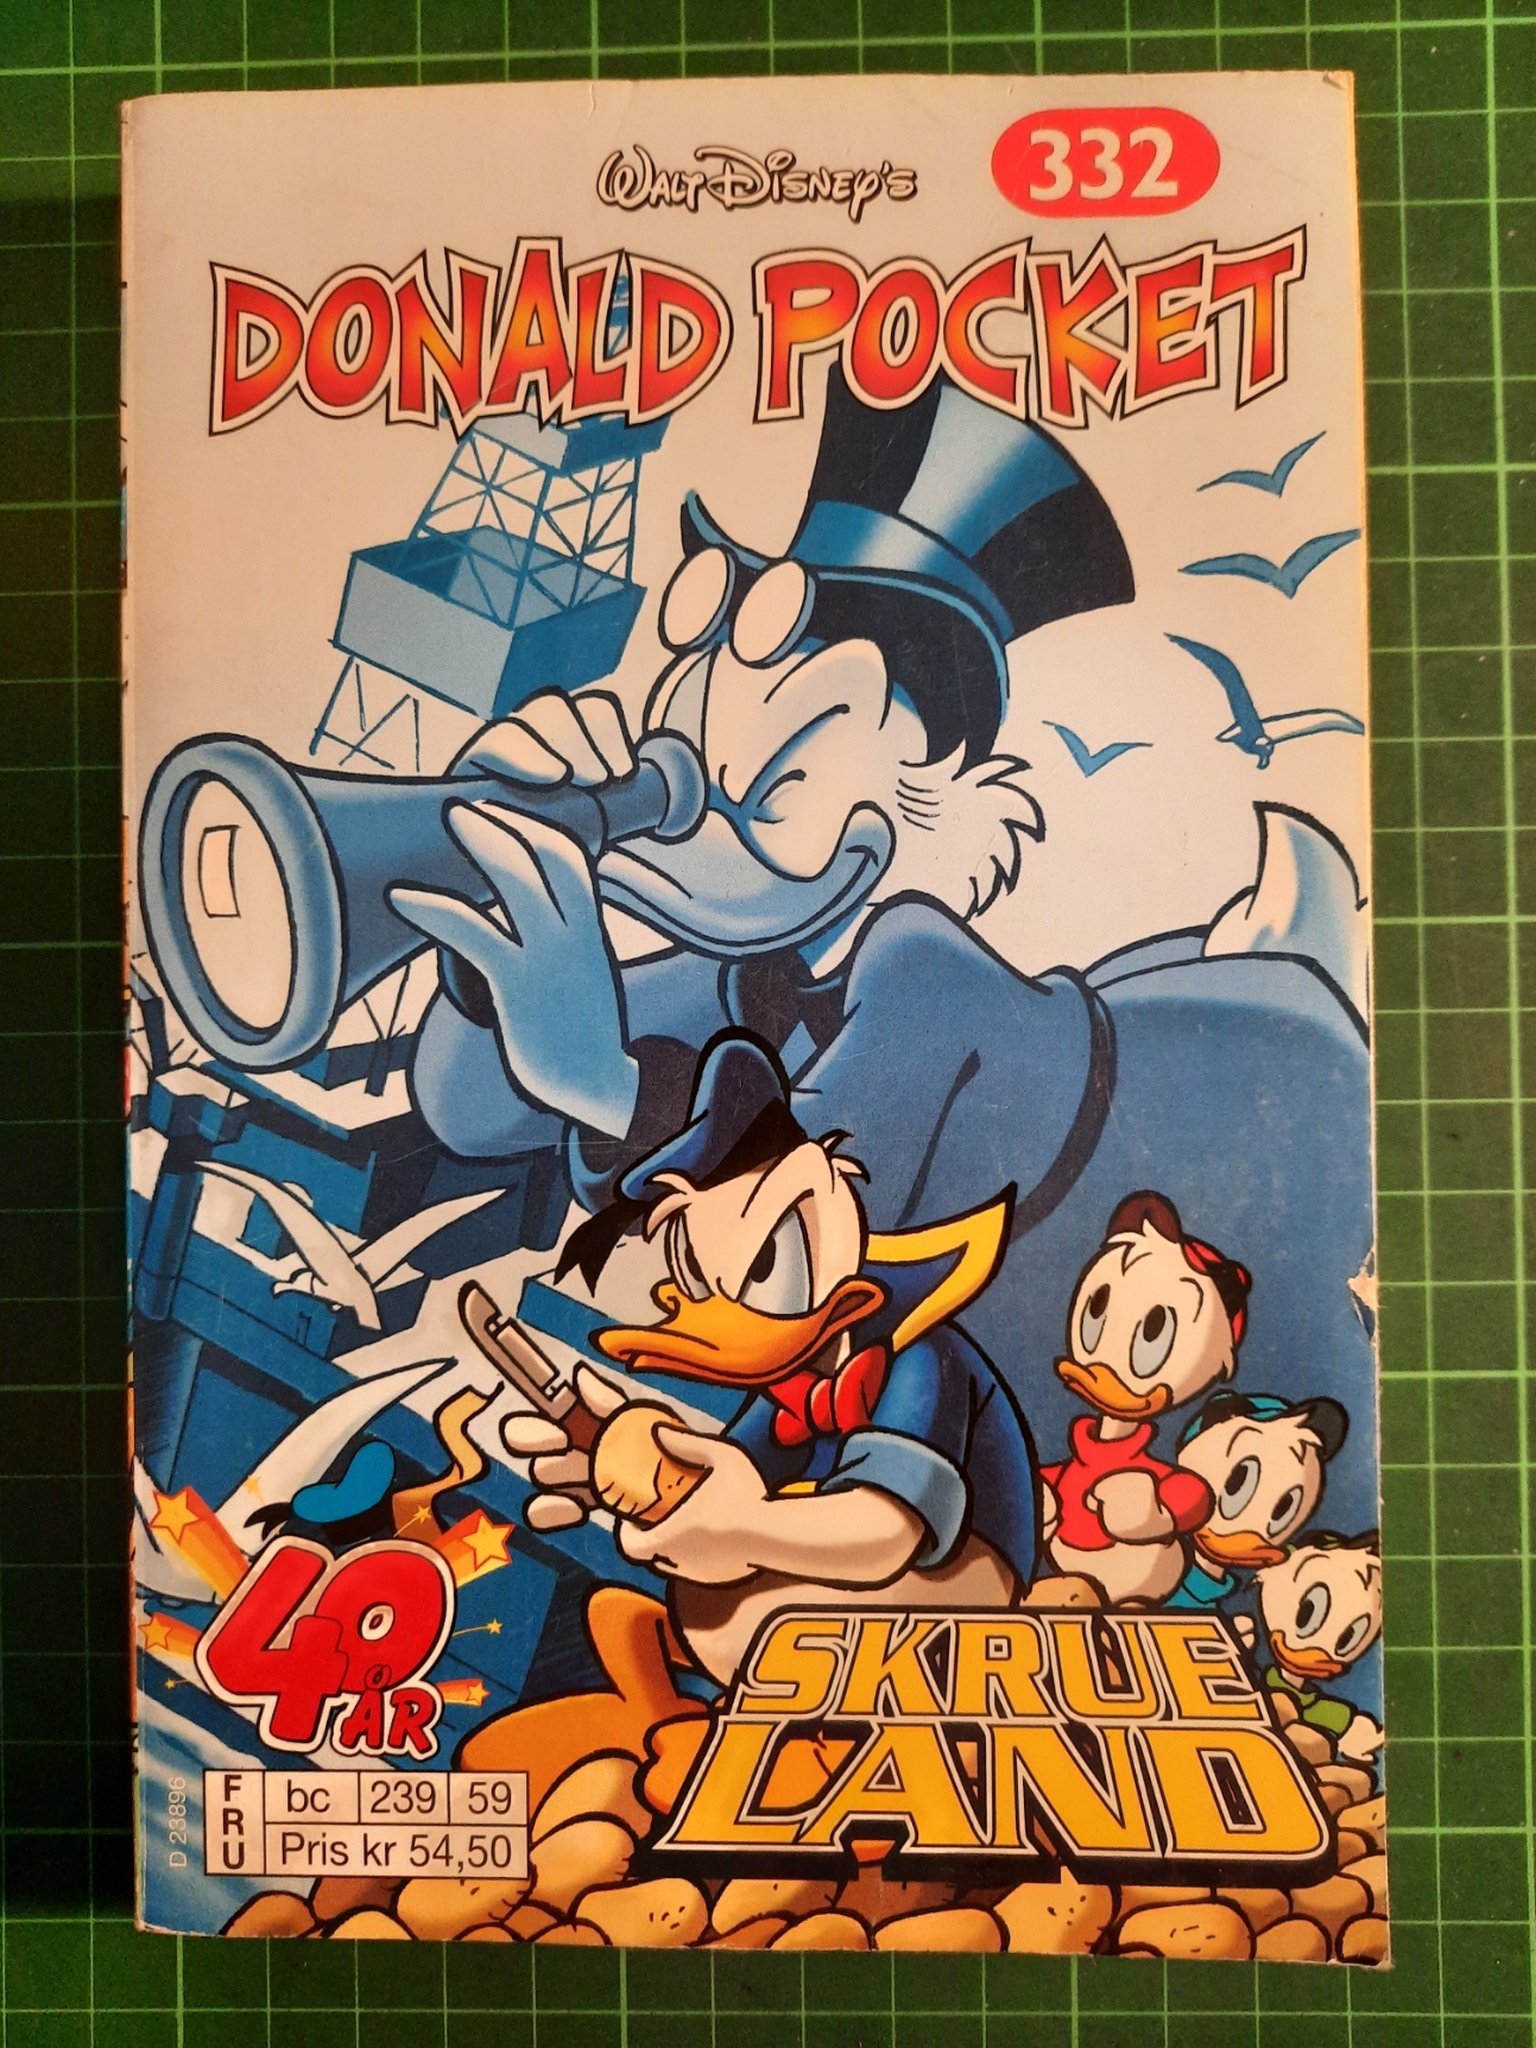 Donald Pocket 332